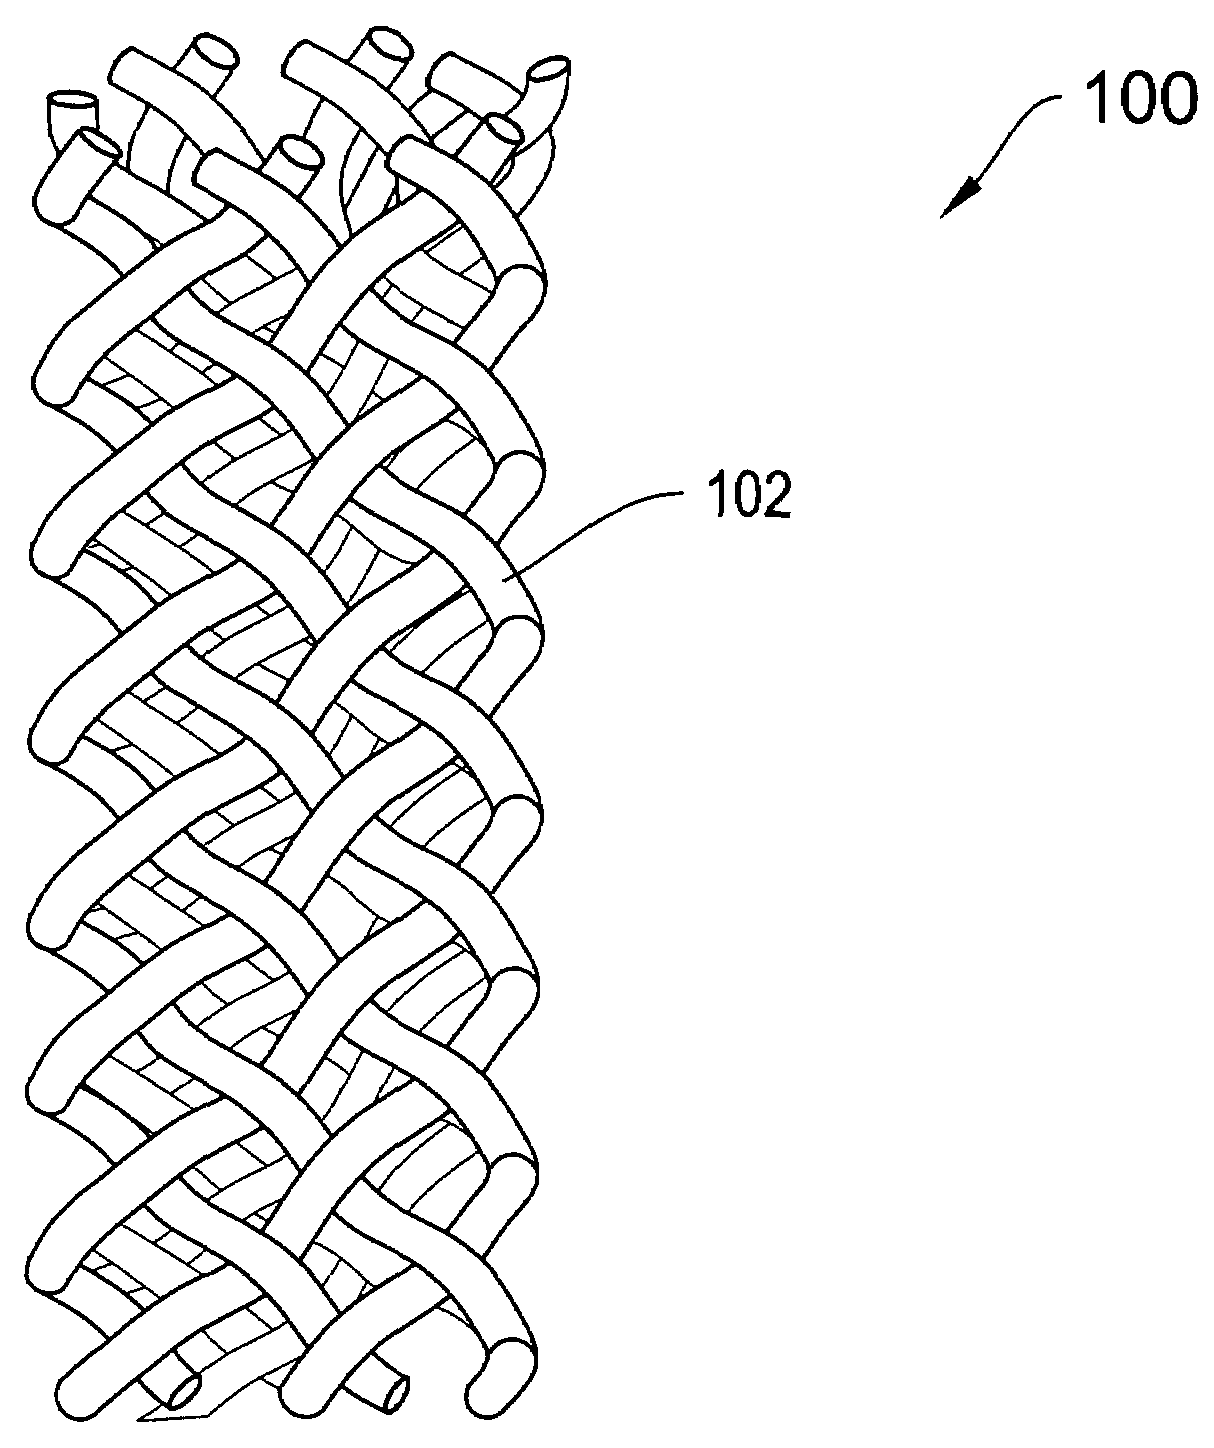 Flattened tubular mesh sling and related methods